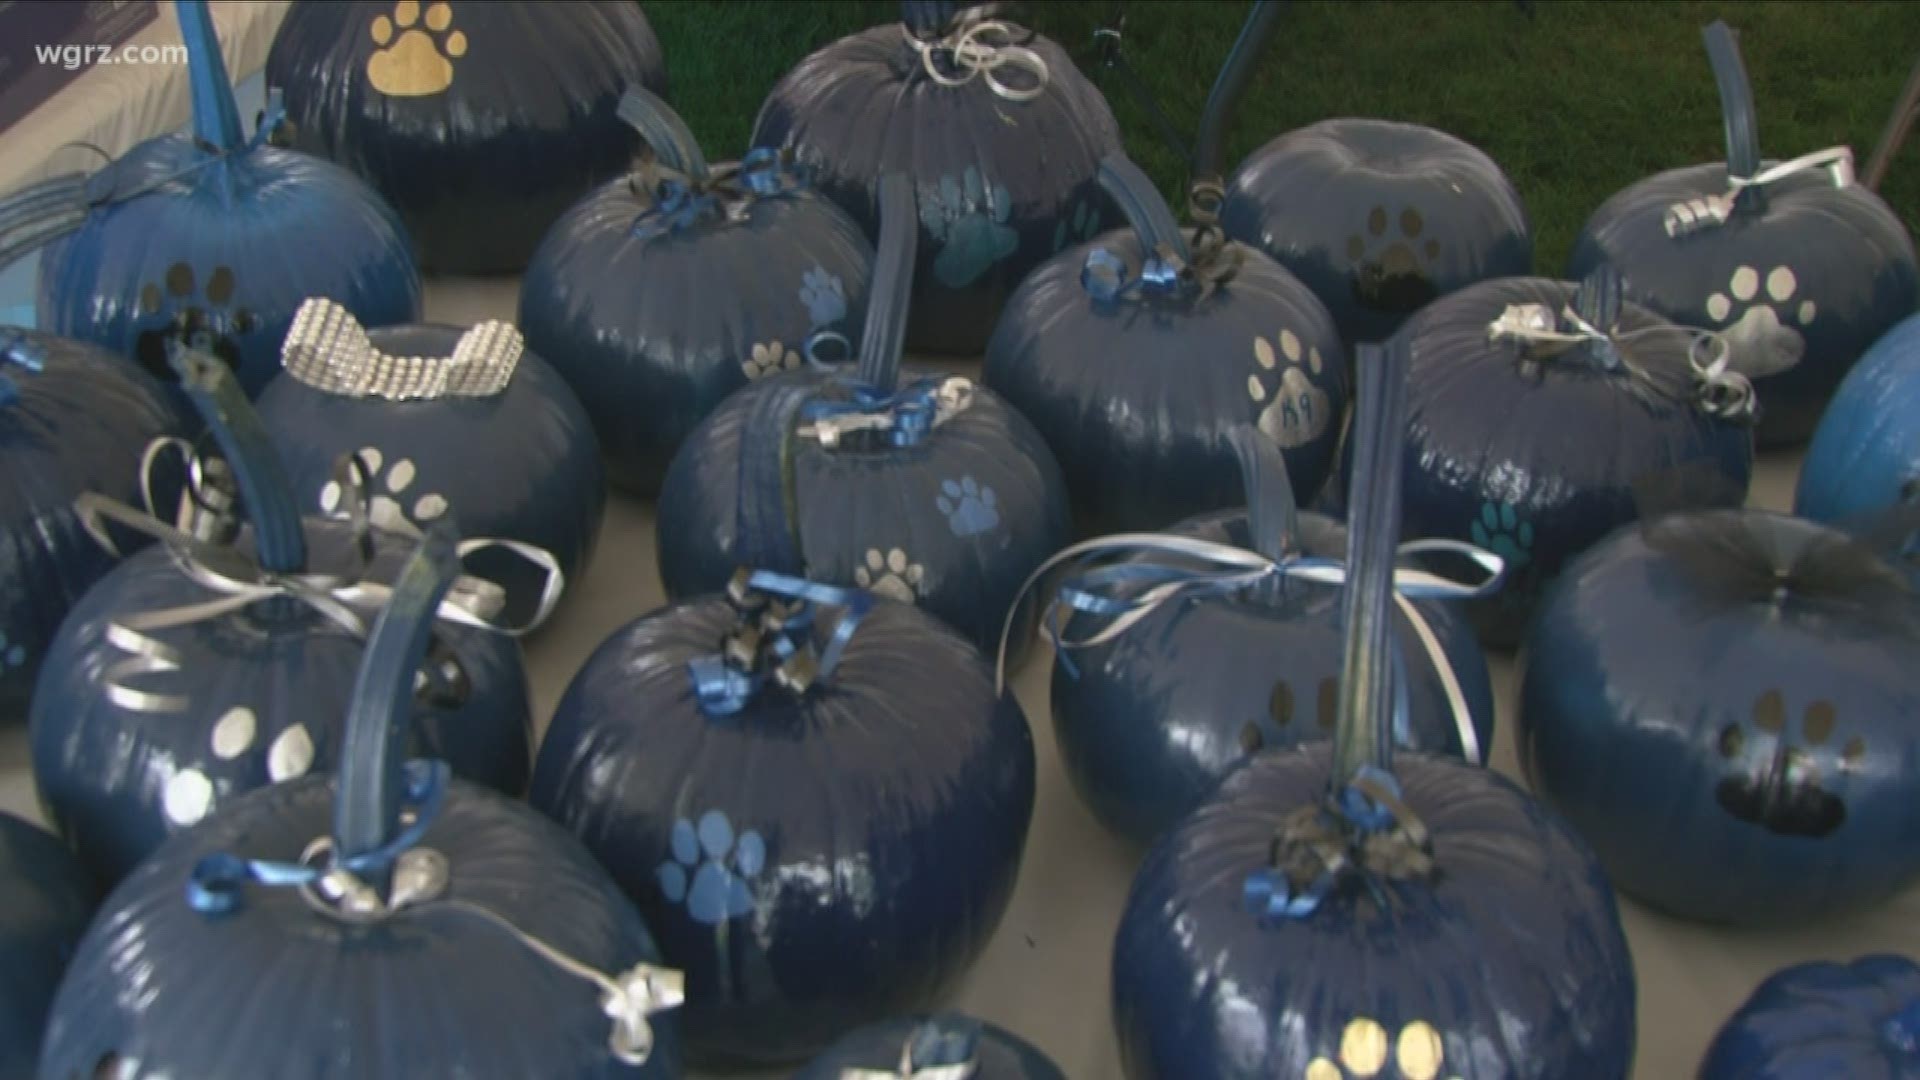 Pumpkins were sold today in Memory of Officer 
 Craig Lehner.